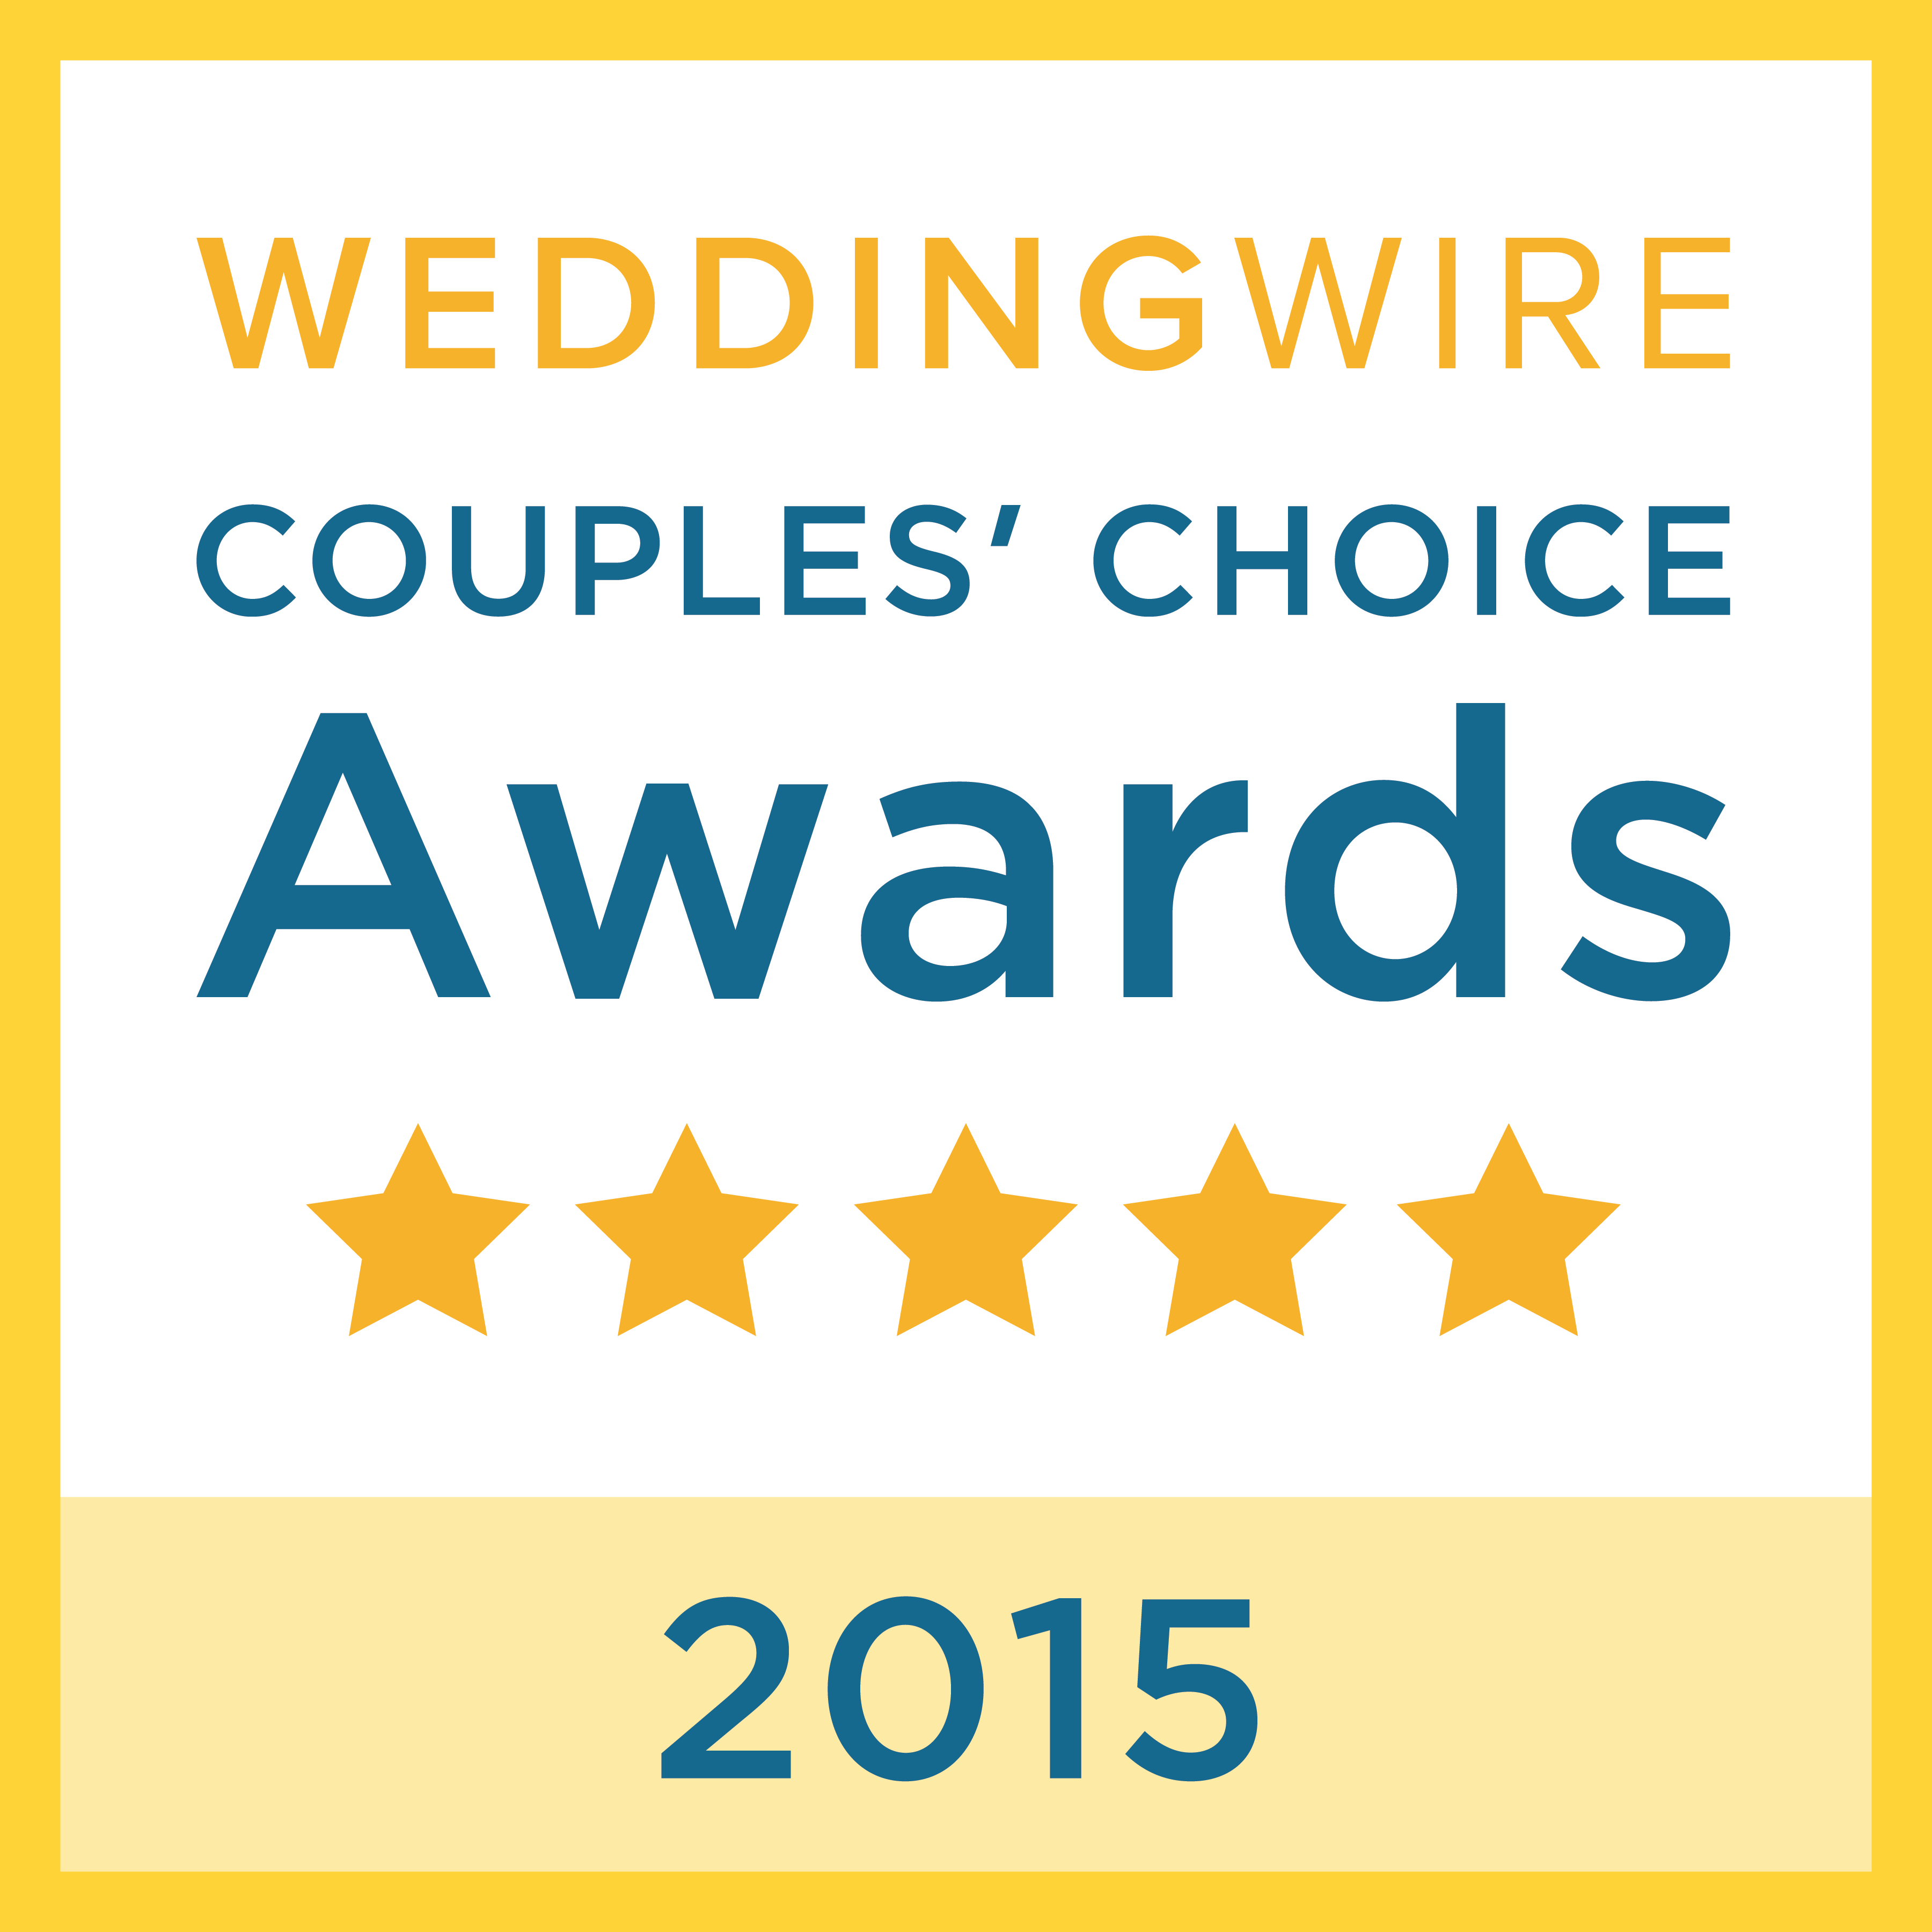 Virginia DJs awarded WeddingWire Couples' Choice Awards in 2015.